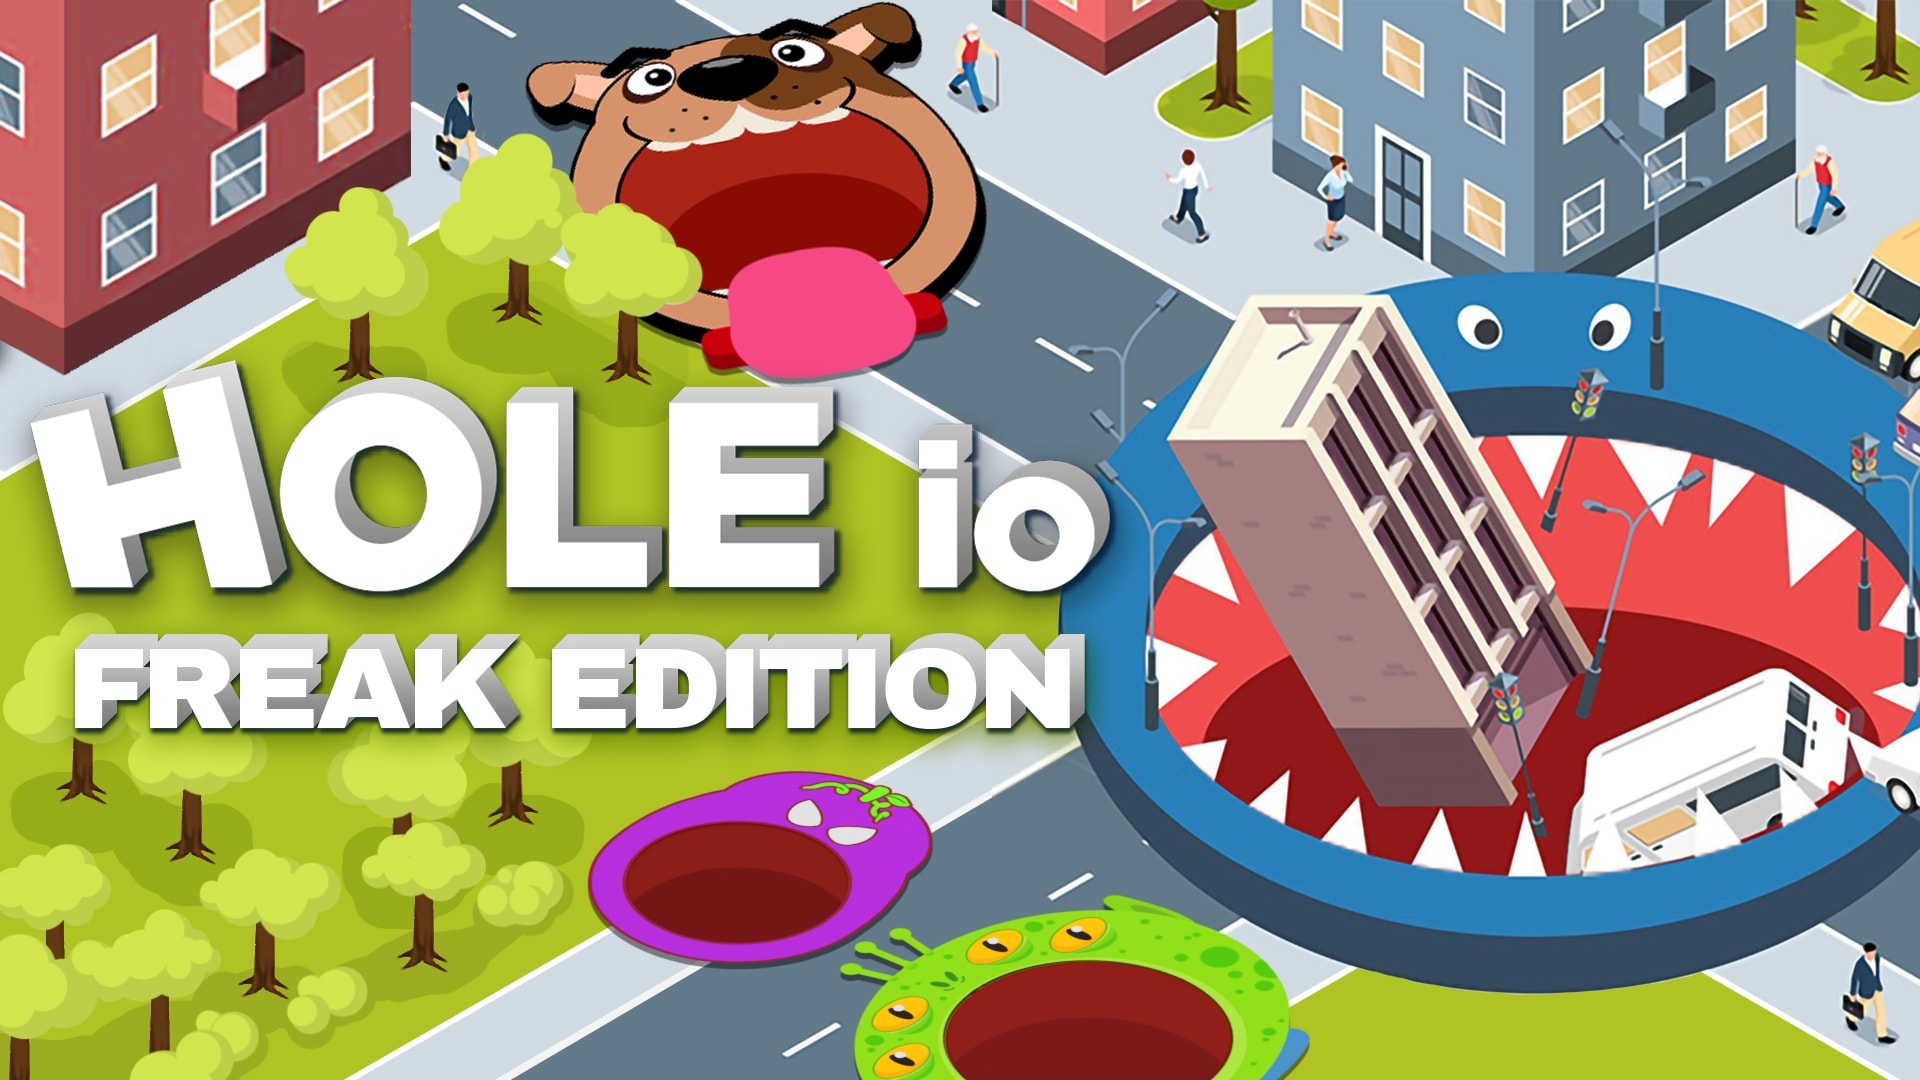 Hole io: Freak Edition